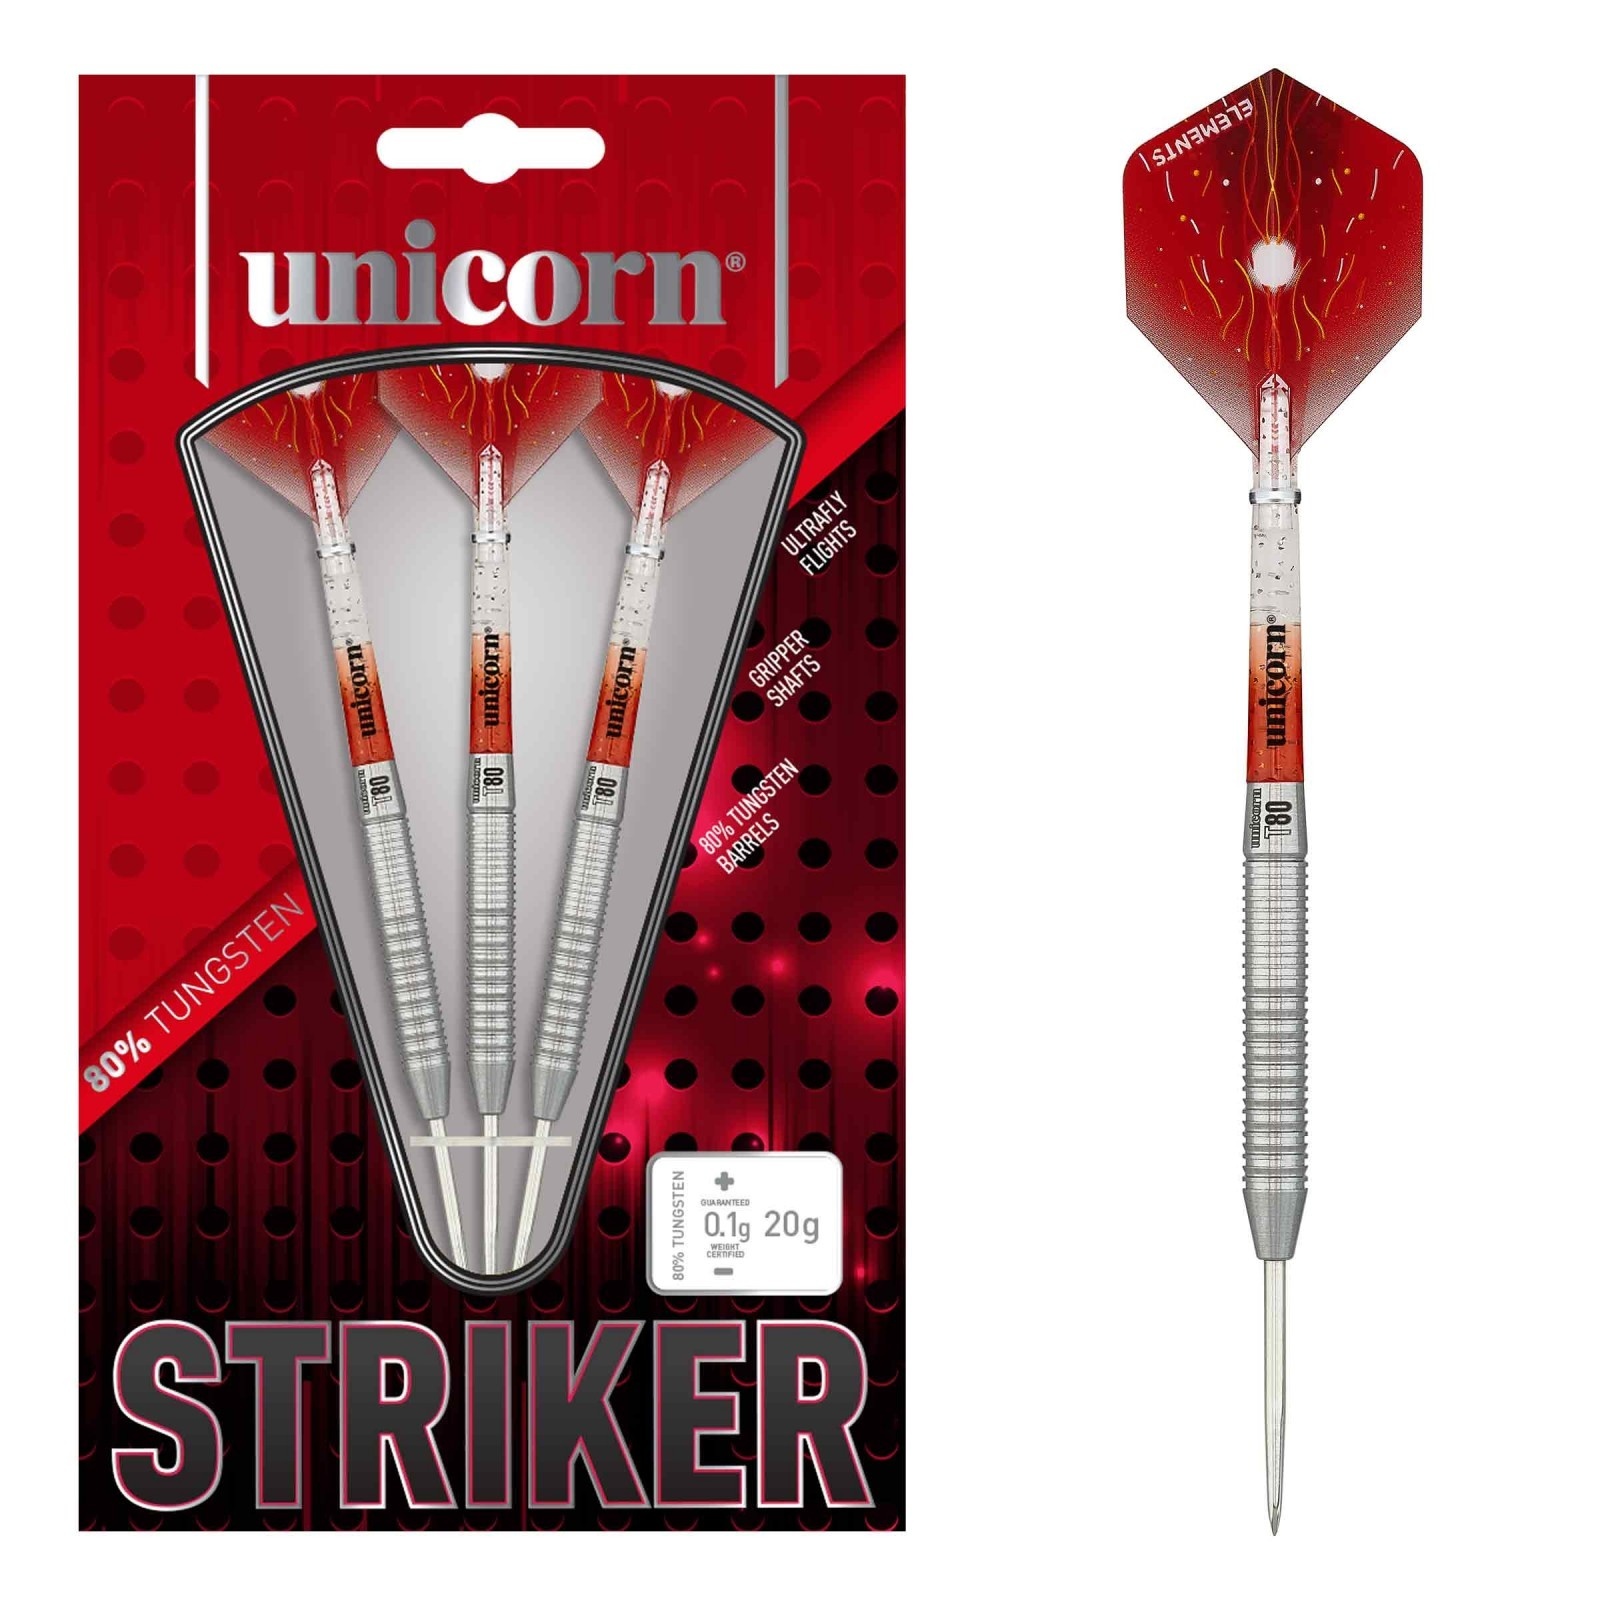 1 - Core 80% Striker XL Unicorn Steeldarts